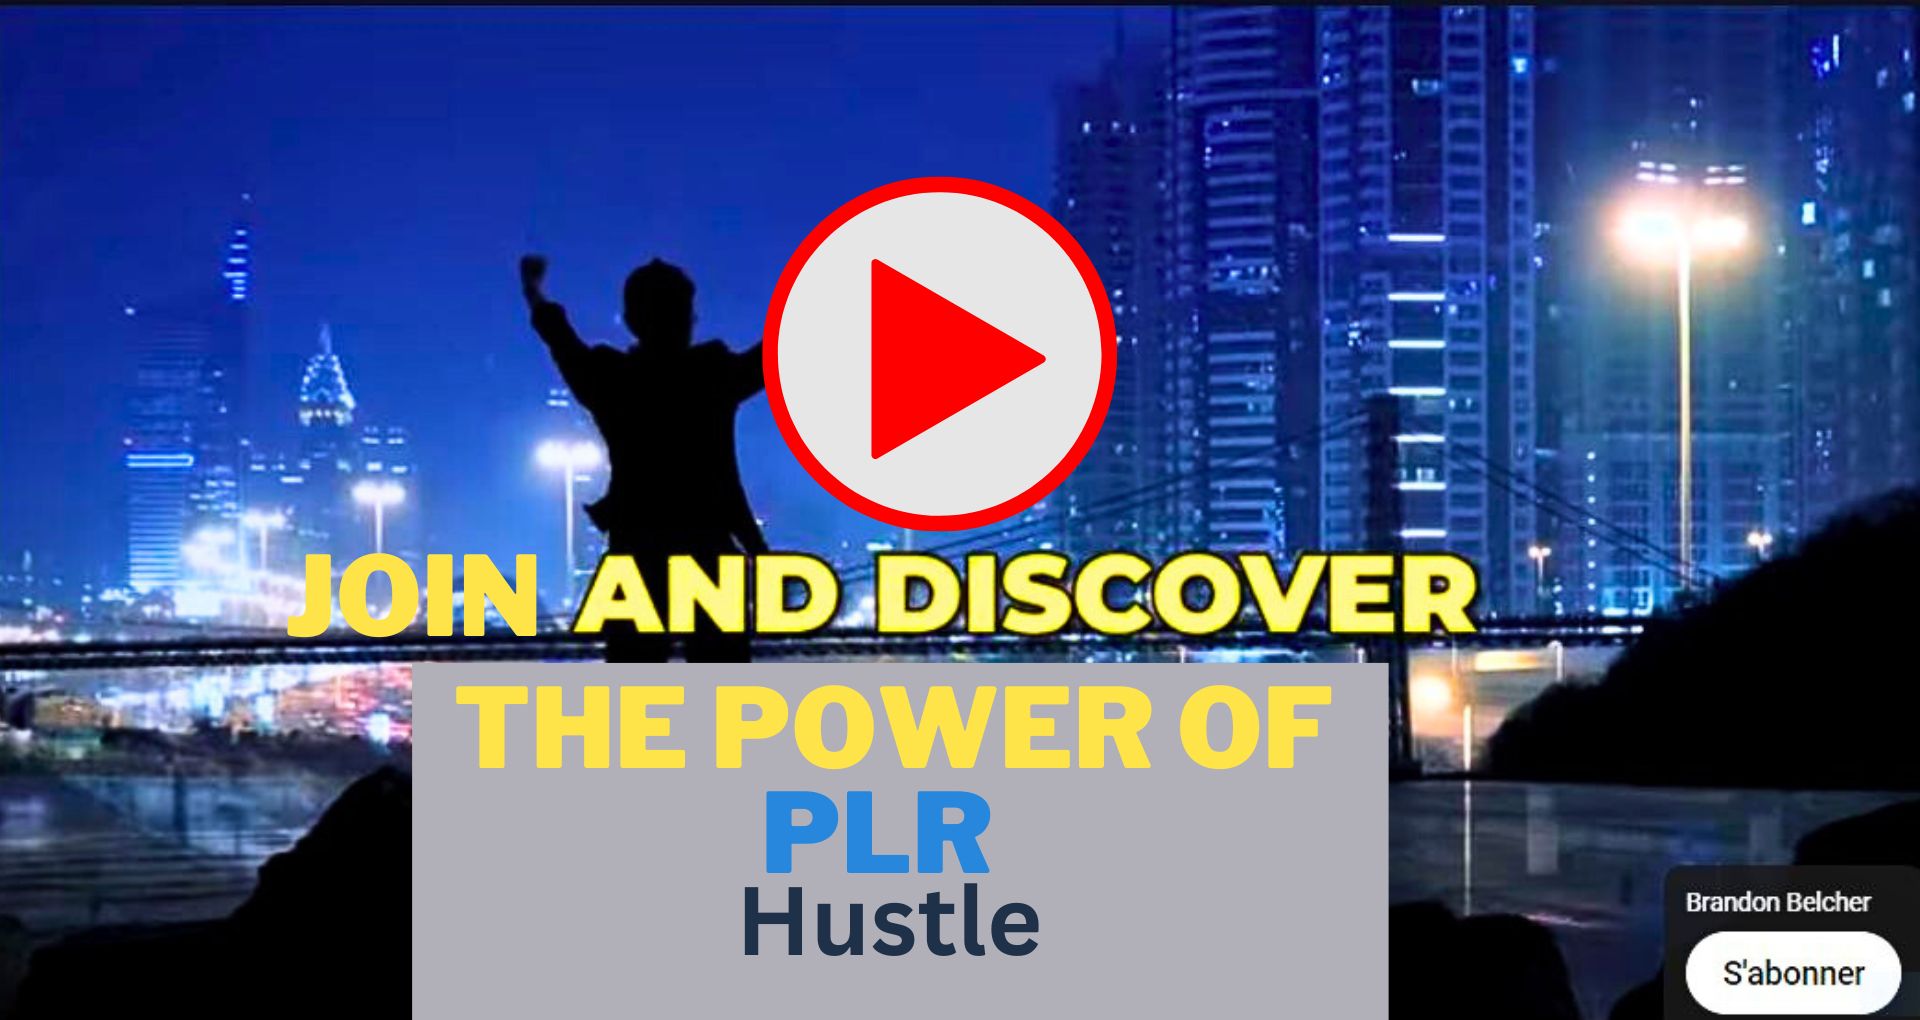 PLR Hustle video